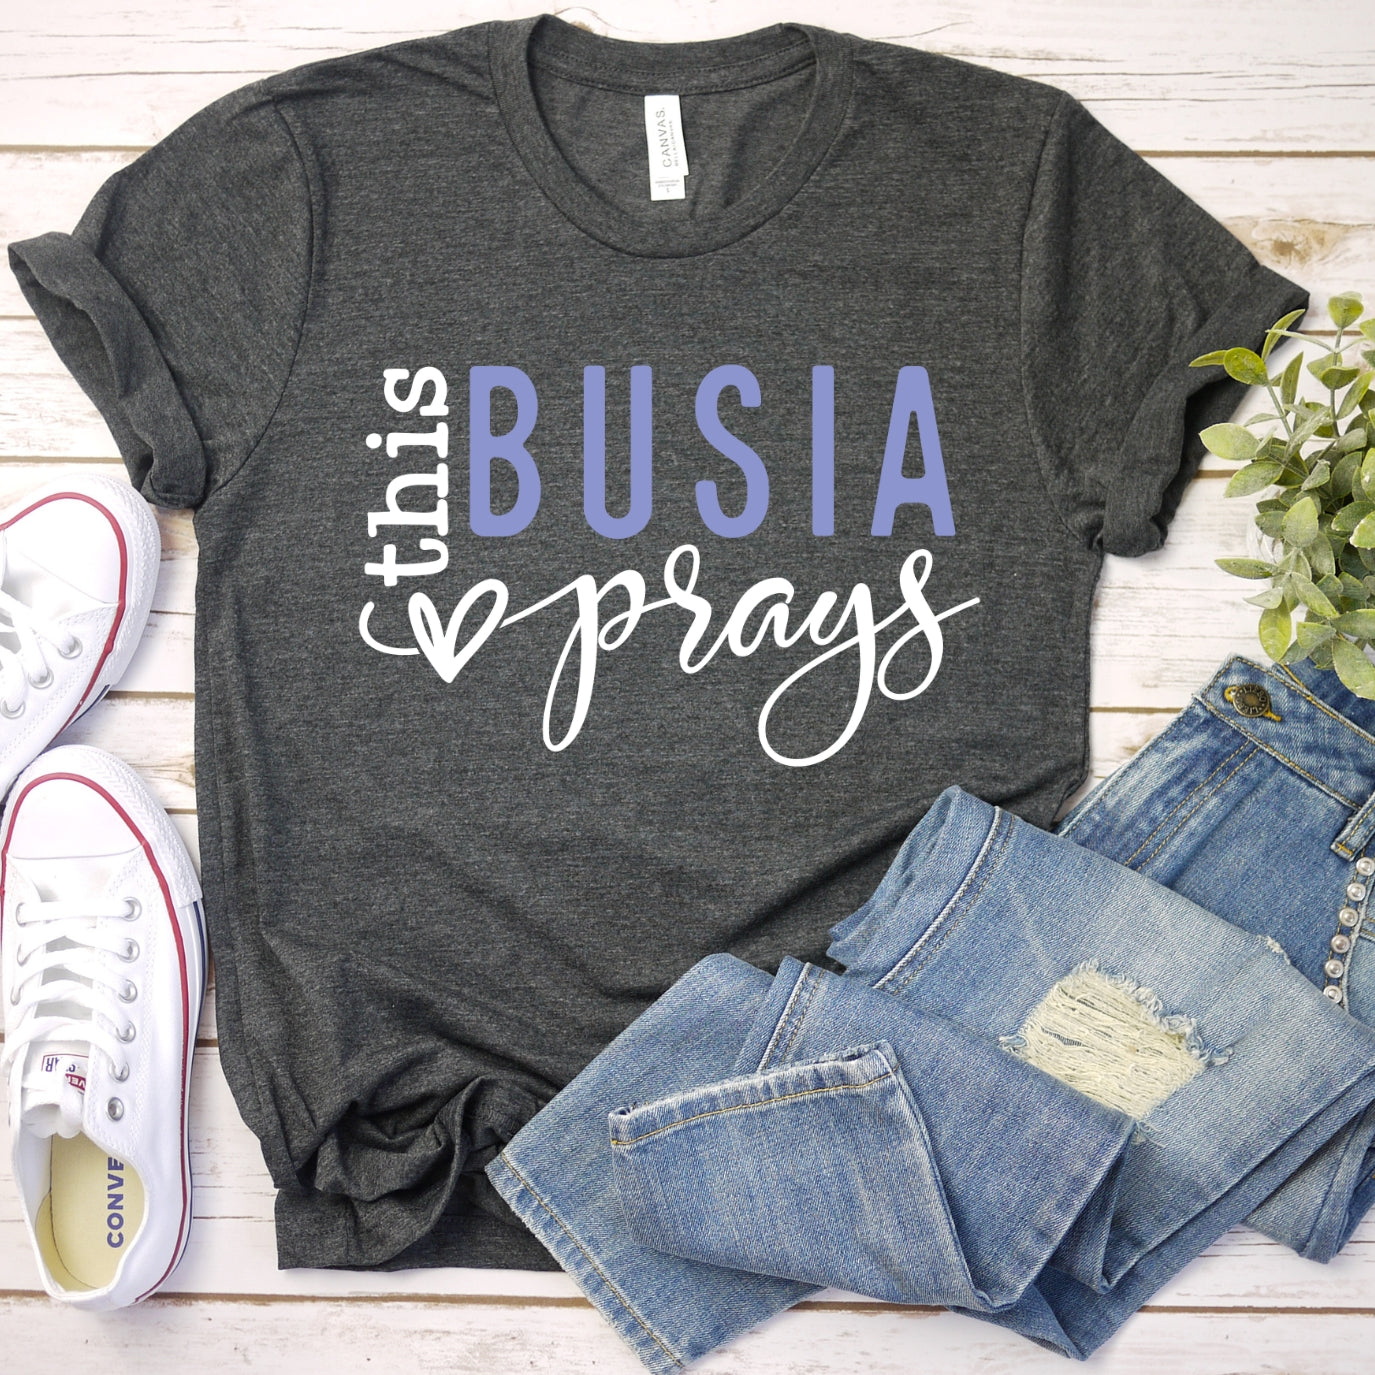 This Busia Prays Women's T-Shirt